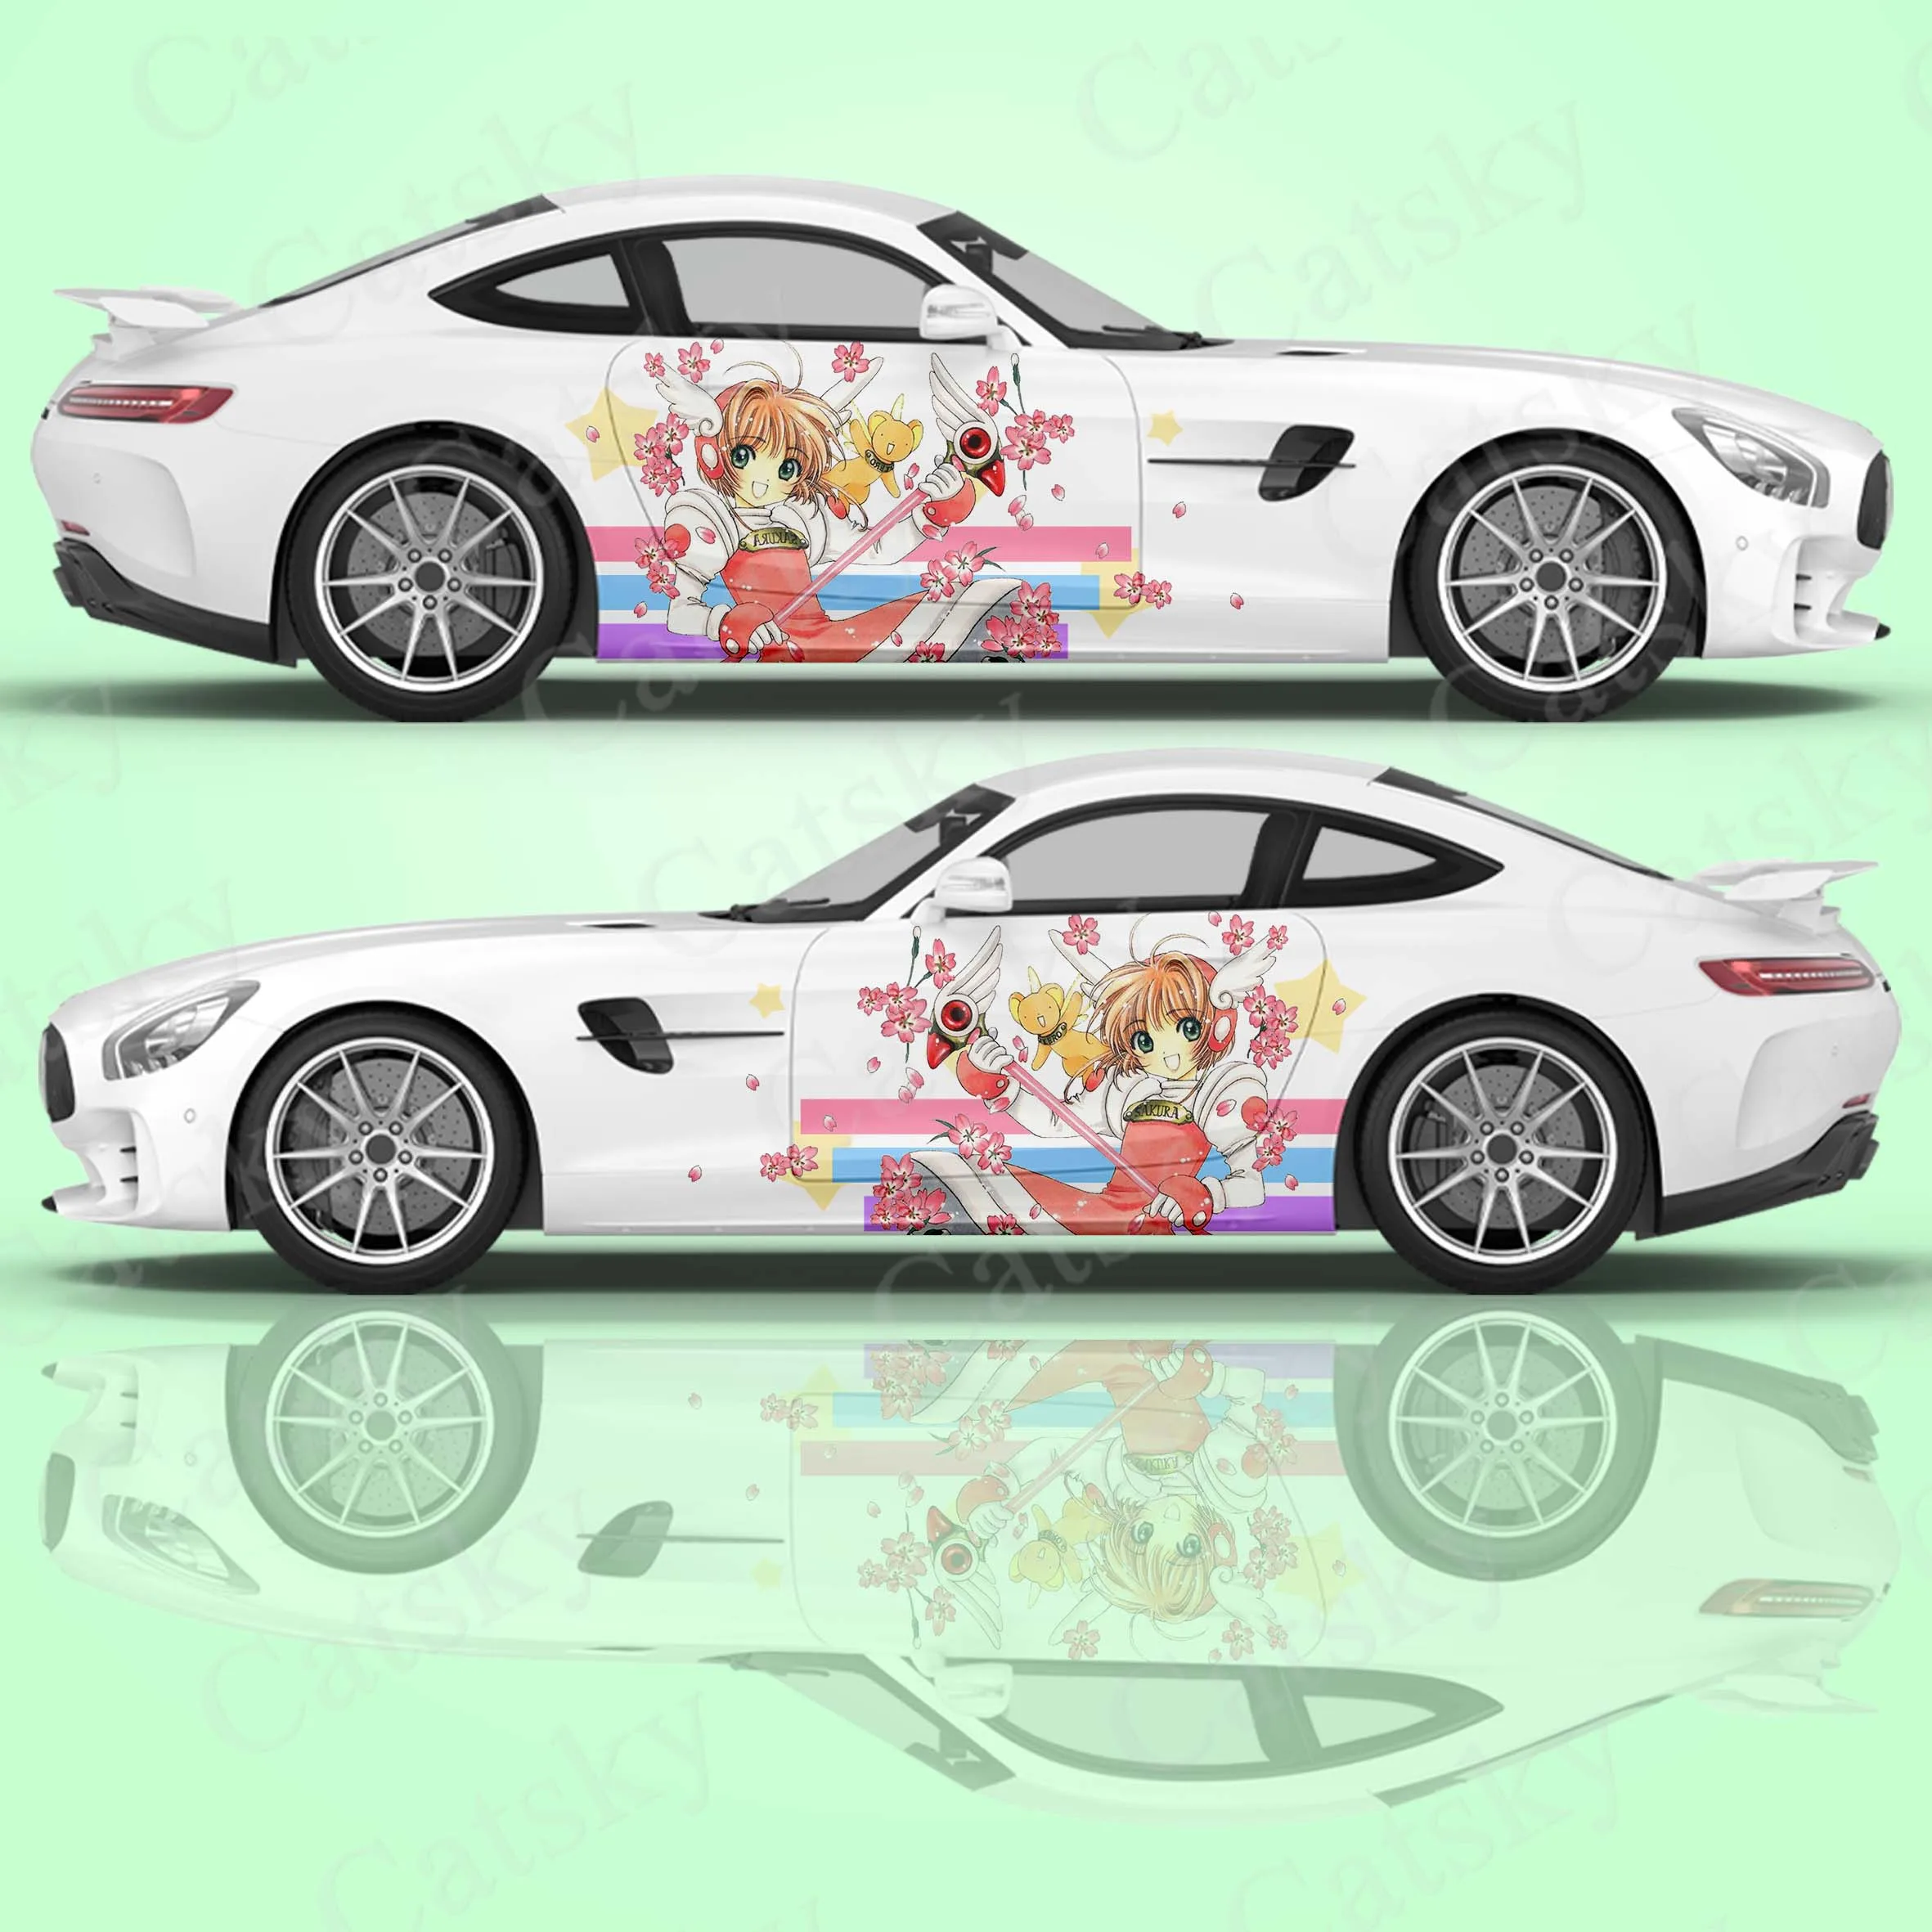 

Cardcaptor Sakura Car Sticker Fits Most Vehicle Wraps Side Vinyl Graphics Anime Girls Cartoon Stickers Decals